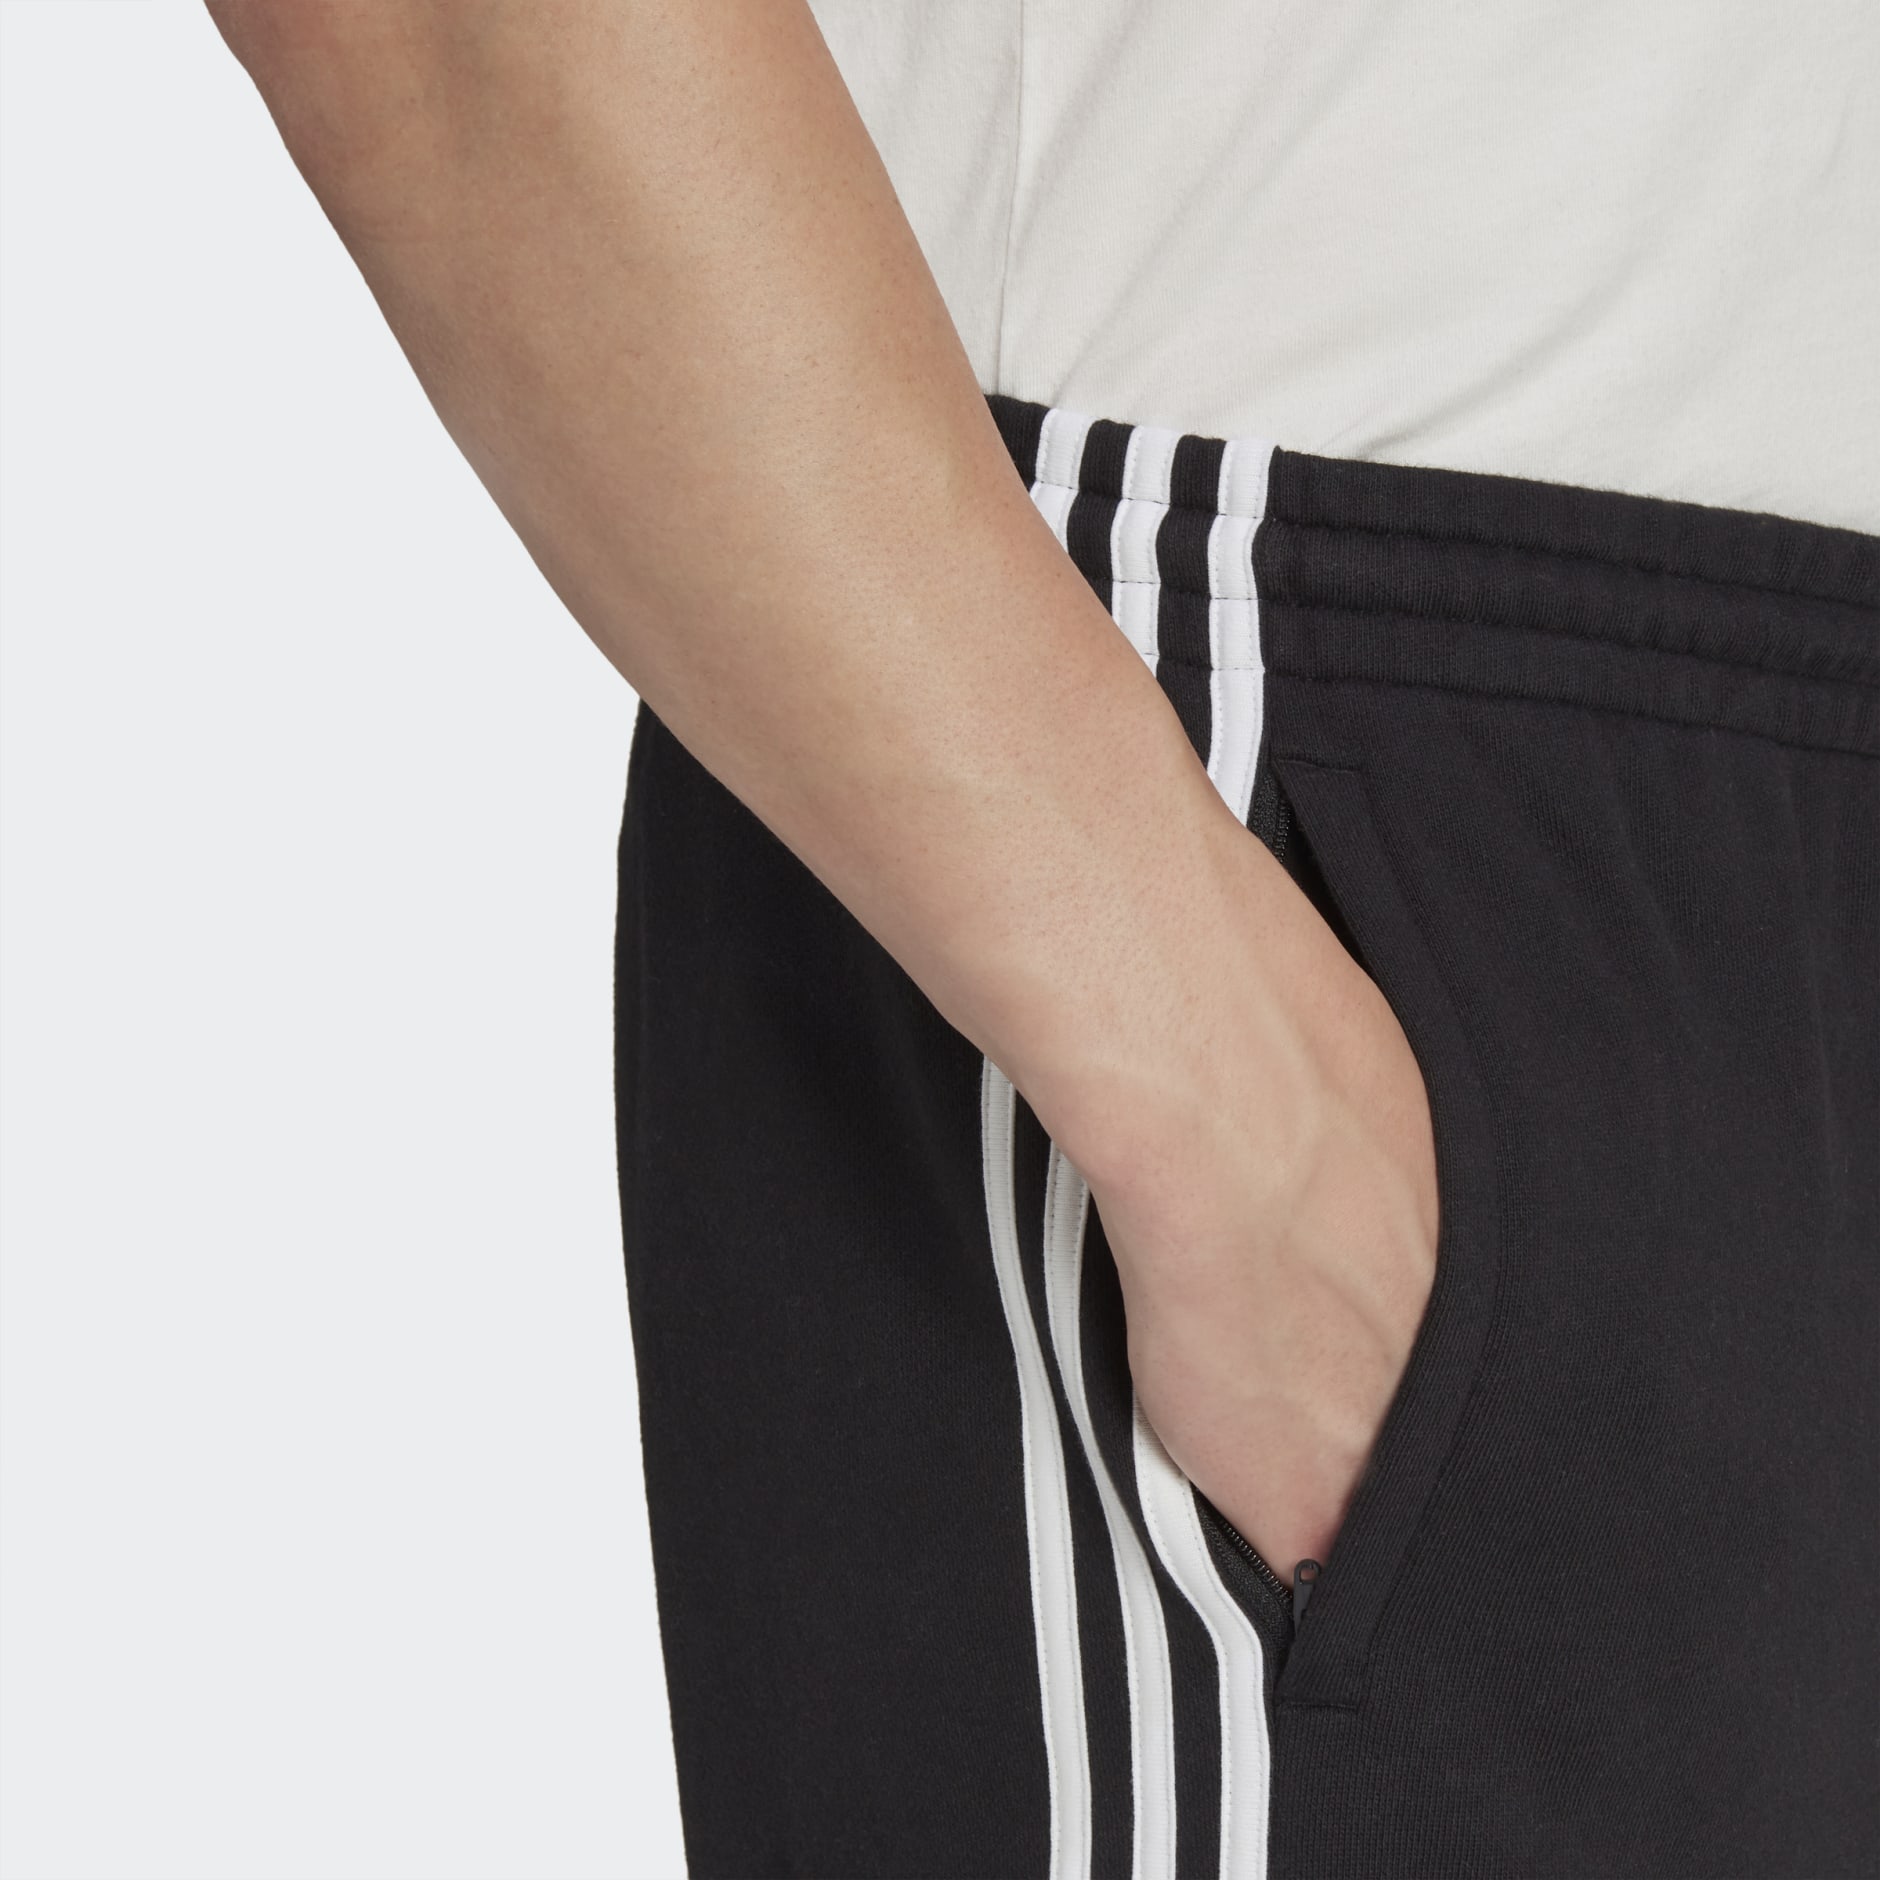 Men's Clothing - Adicolor Classics 3-Stripes Cargo Shorts - Black ...